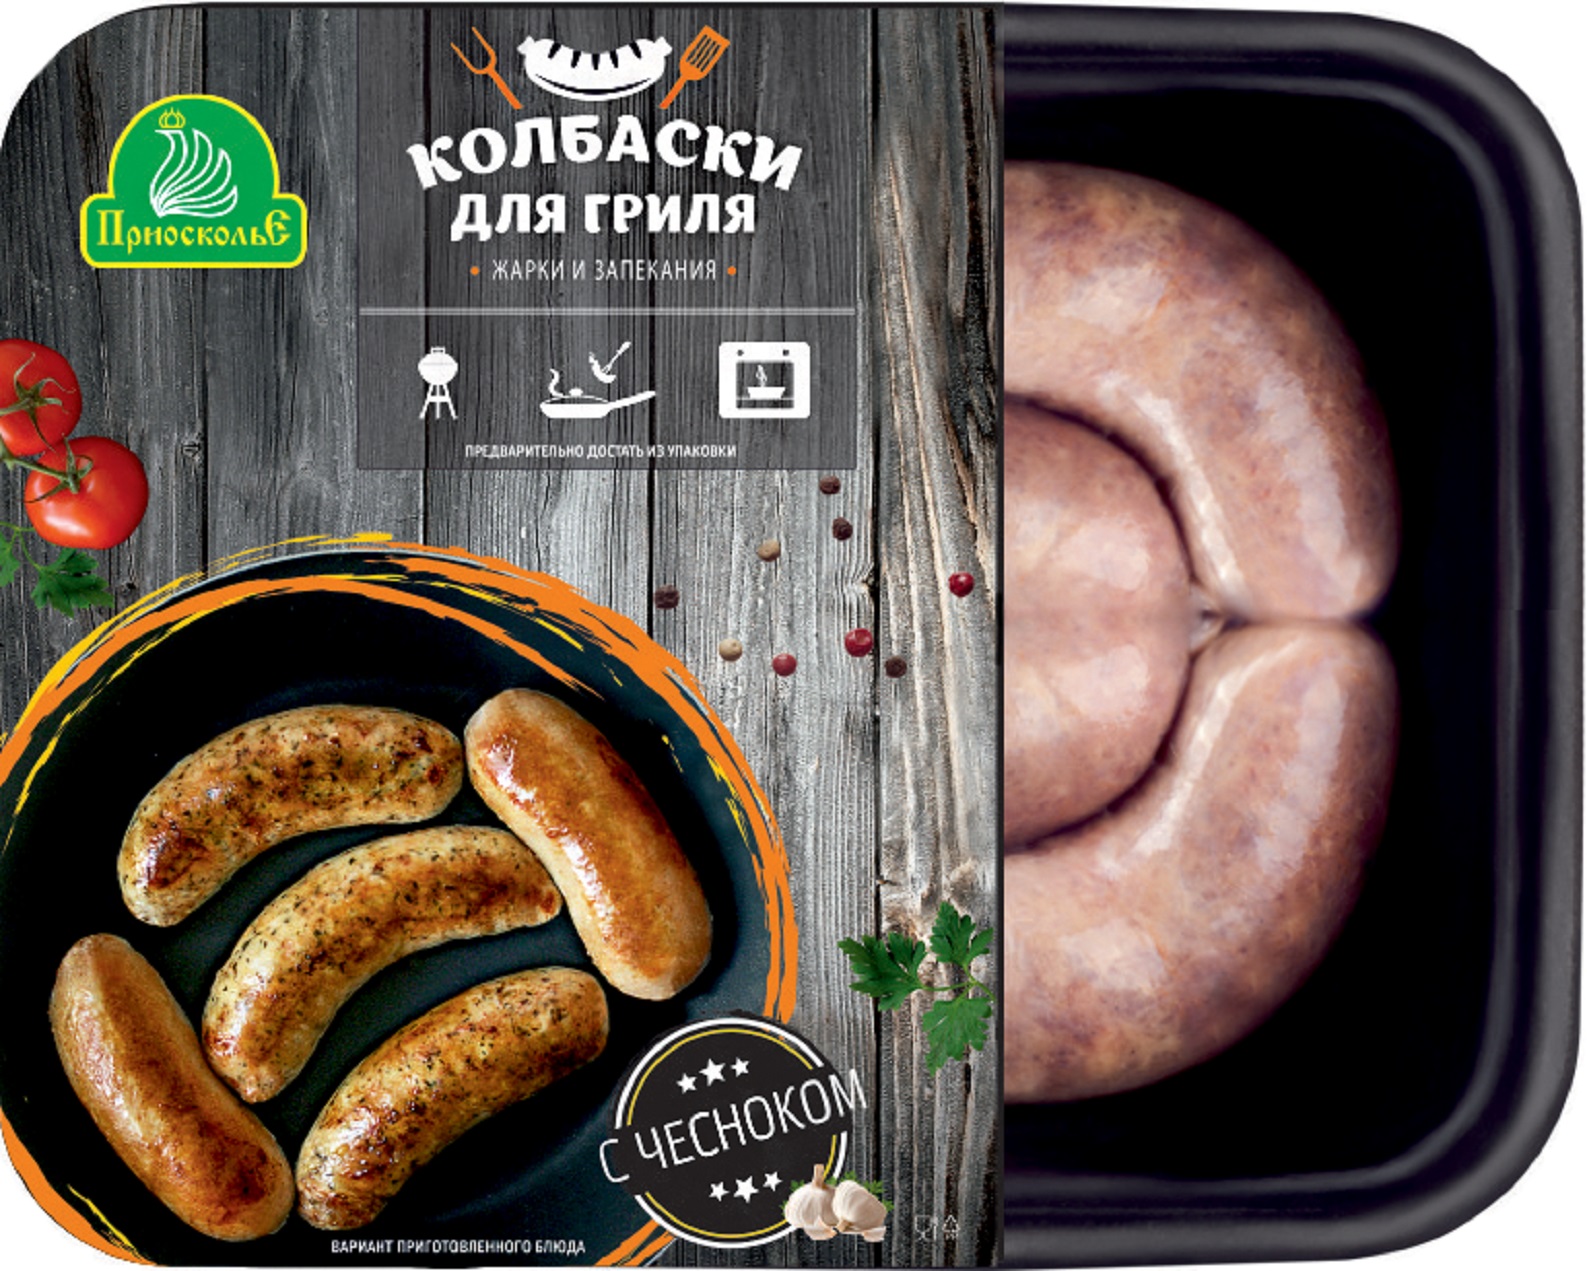 Sausages for grilling "S chesnokom"